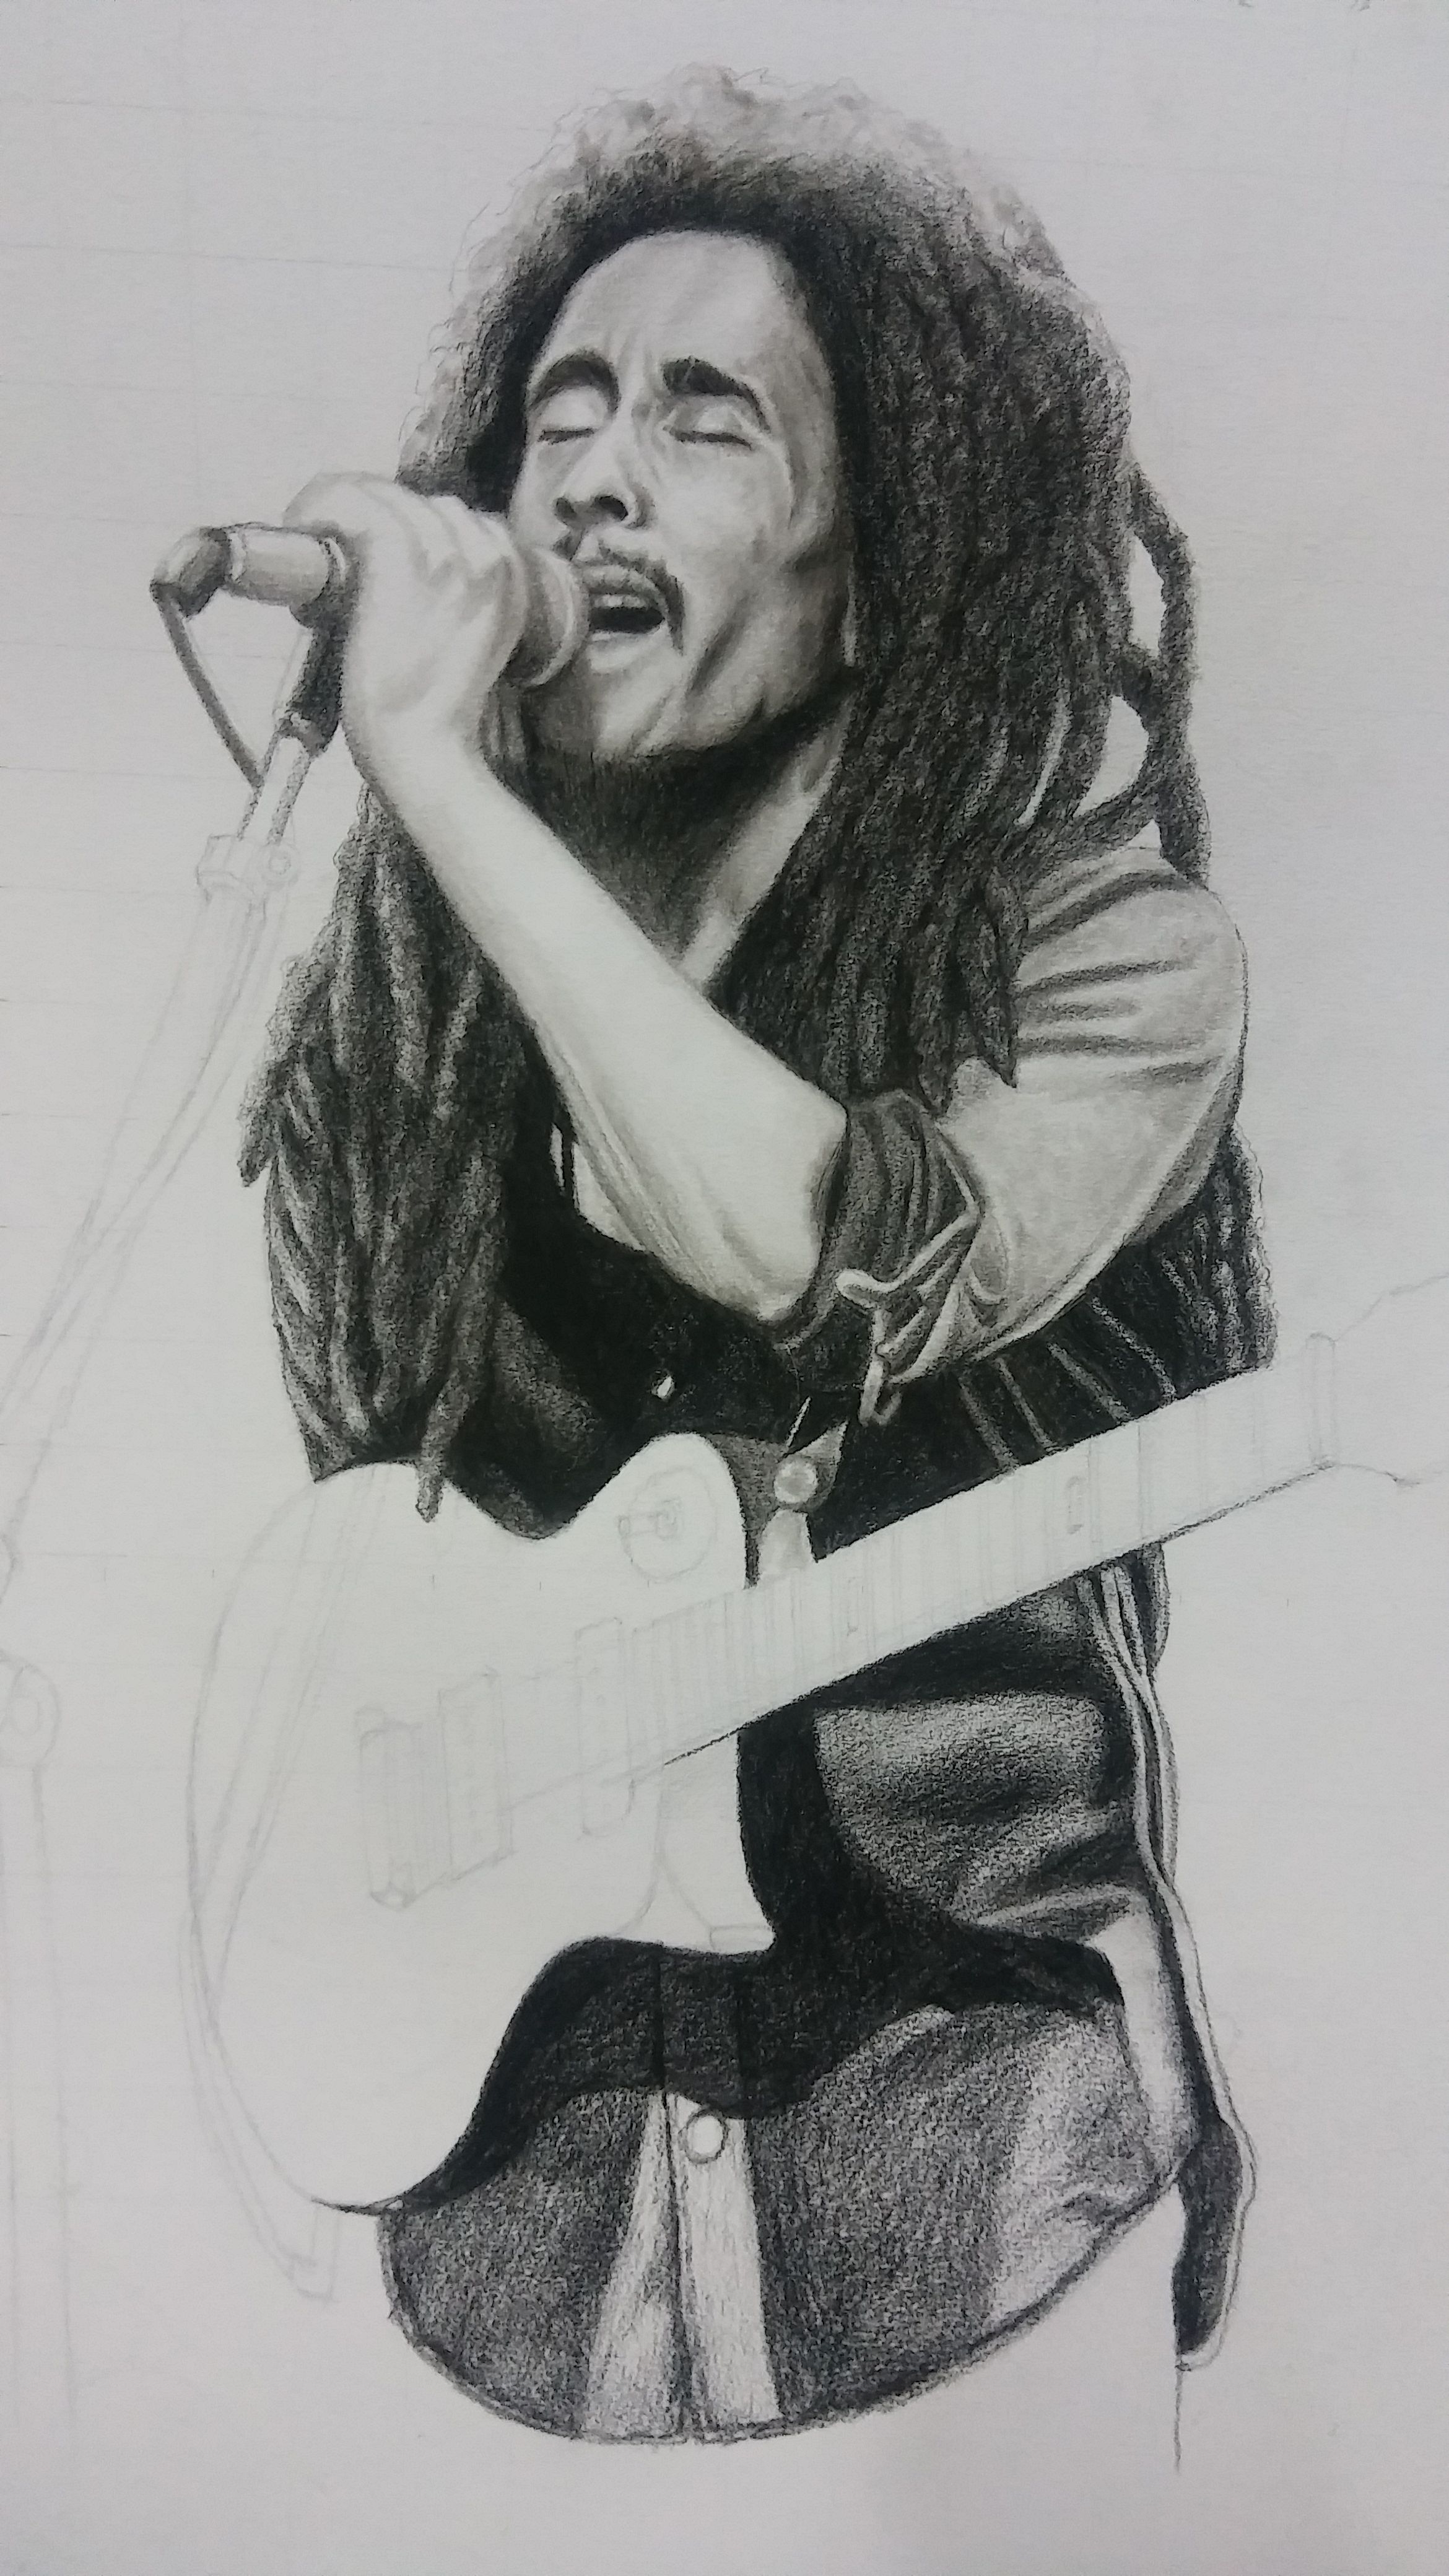 Bob Marley Sketch at Explore collection of Bob